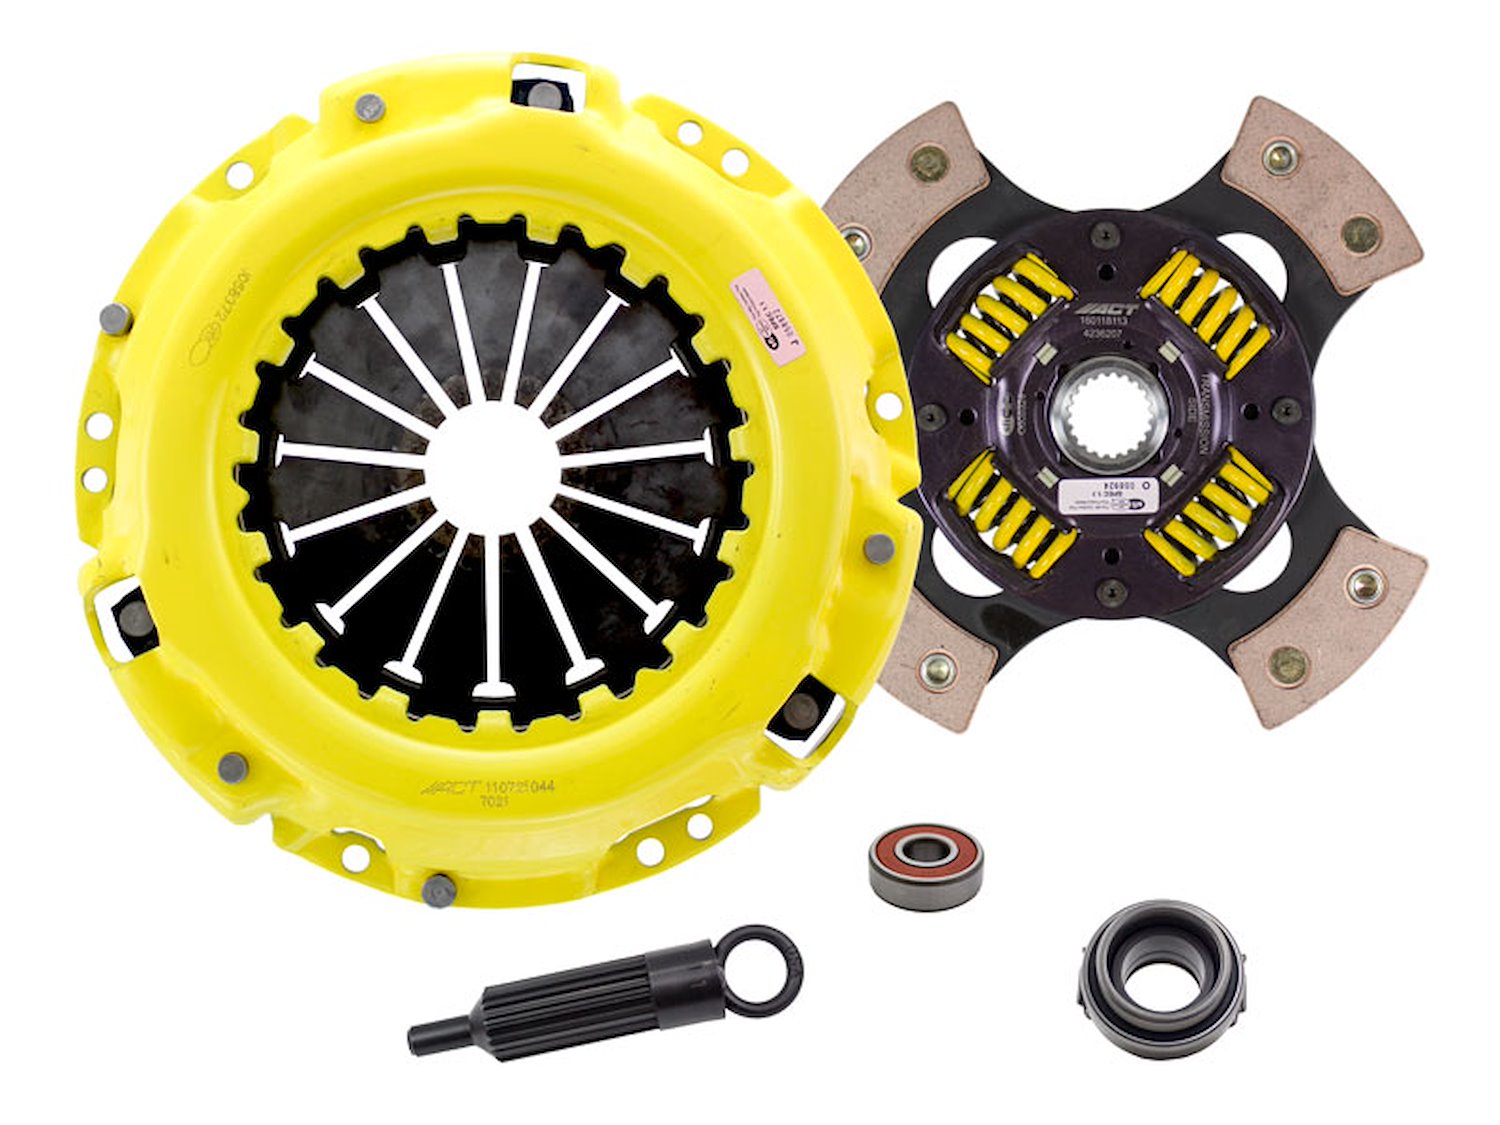 HD/Race Sprung 4-Pad Transmission Clutch Kit Fits Select Lexus/Toyota/Scion